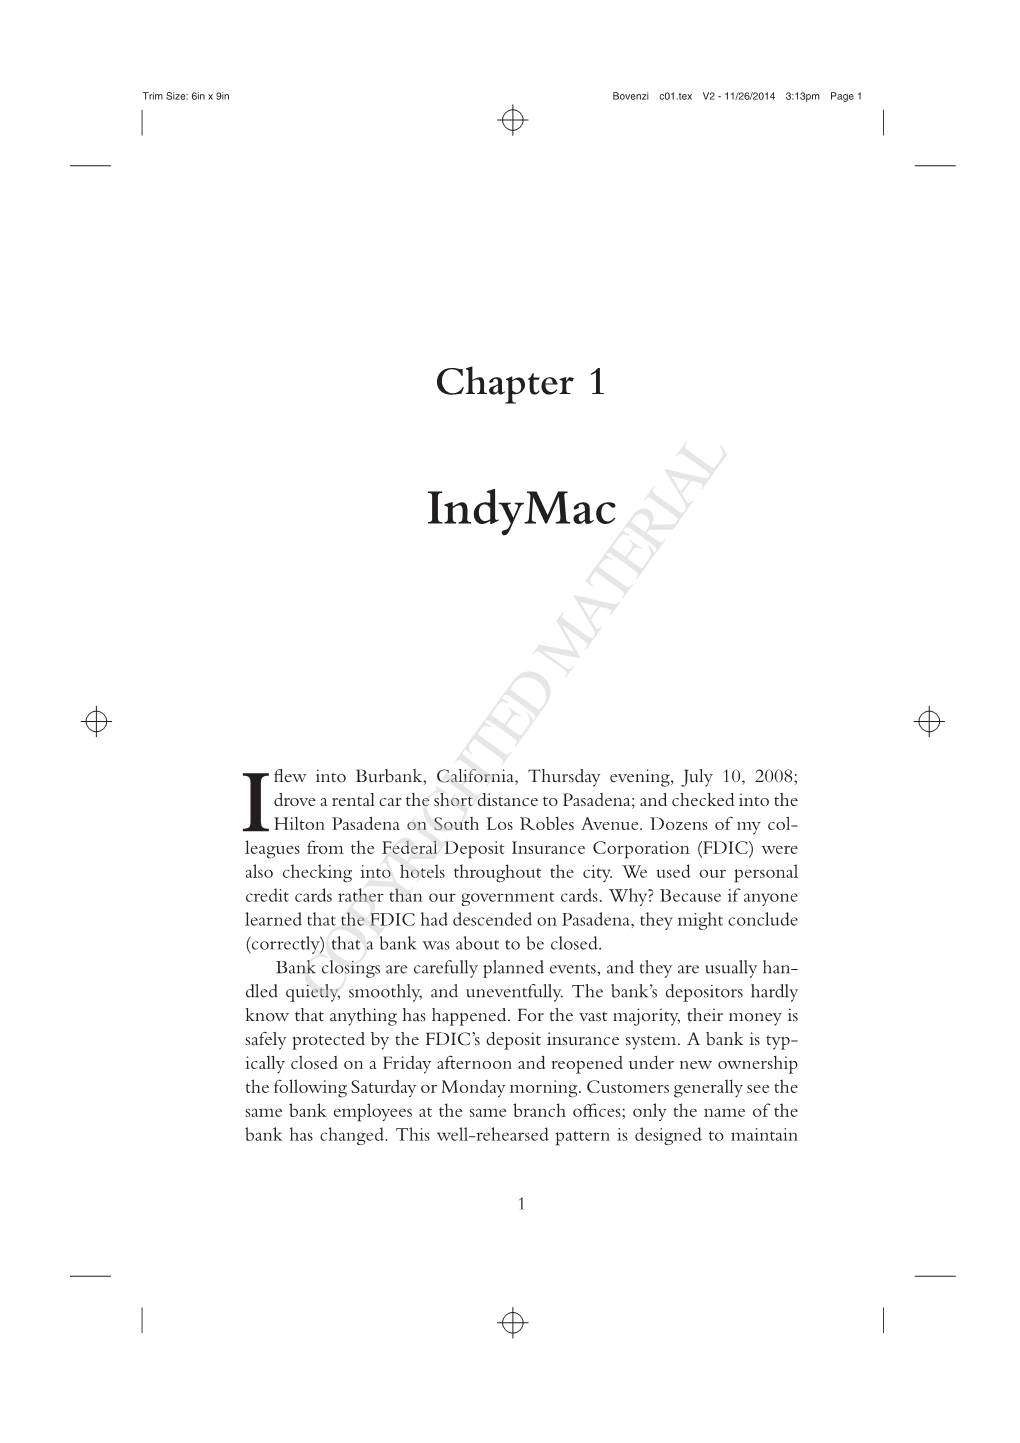 Chapter 1 Indymac Iflew